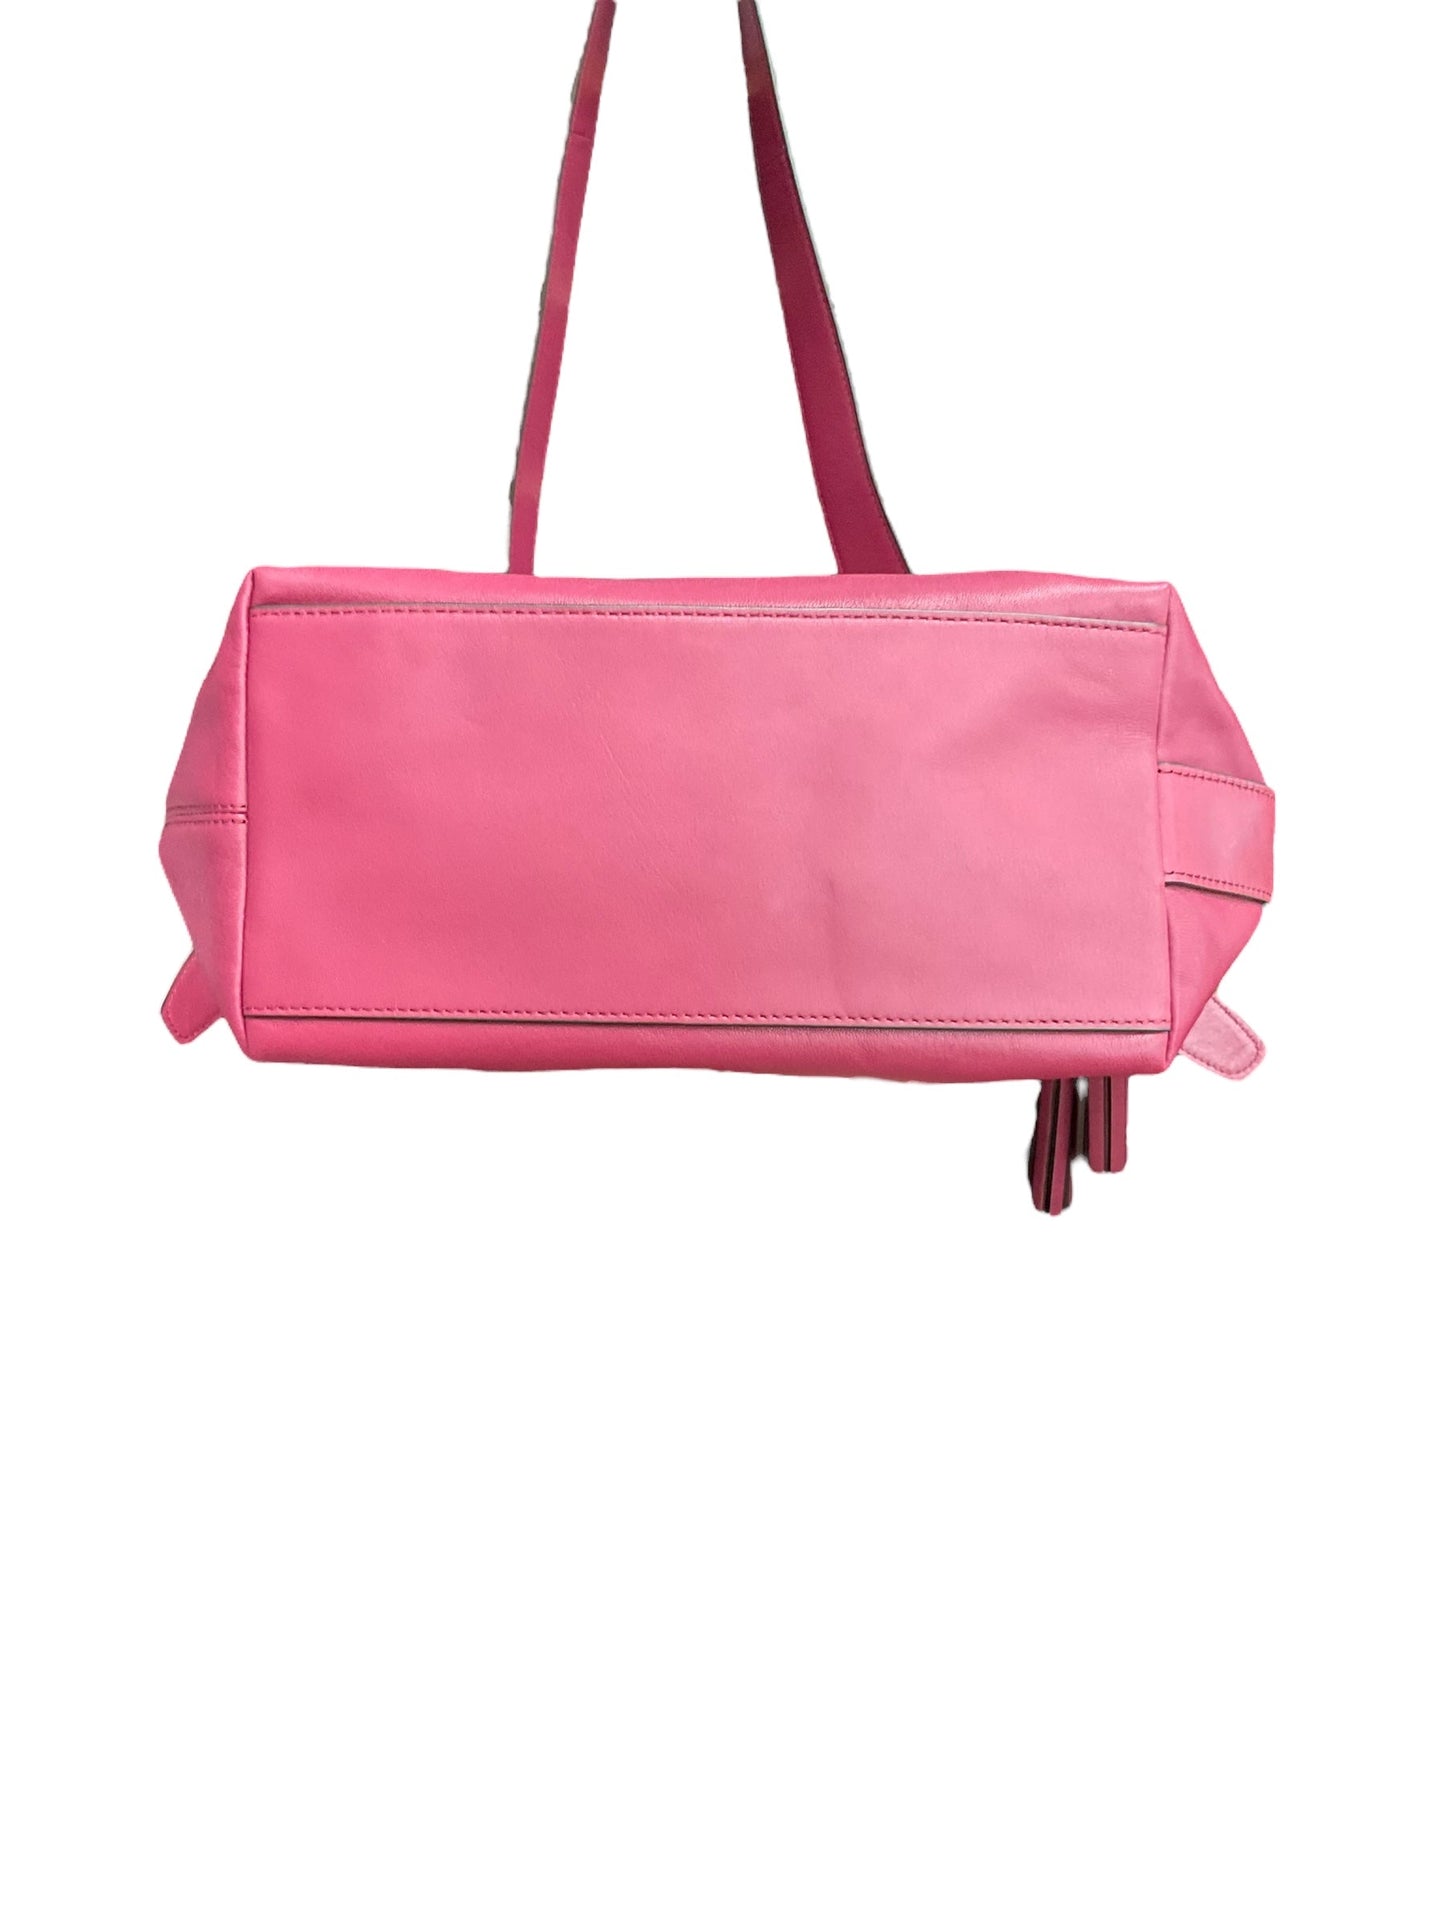 Handbag Designer Coach, Size Large